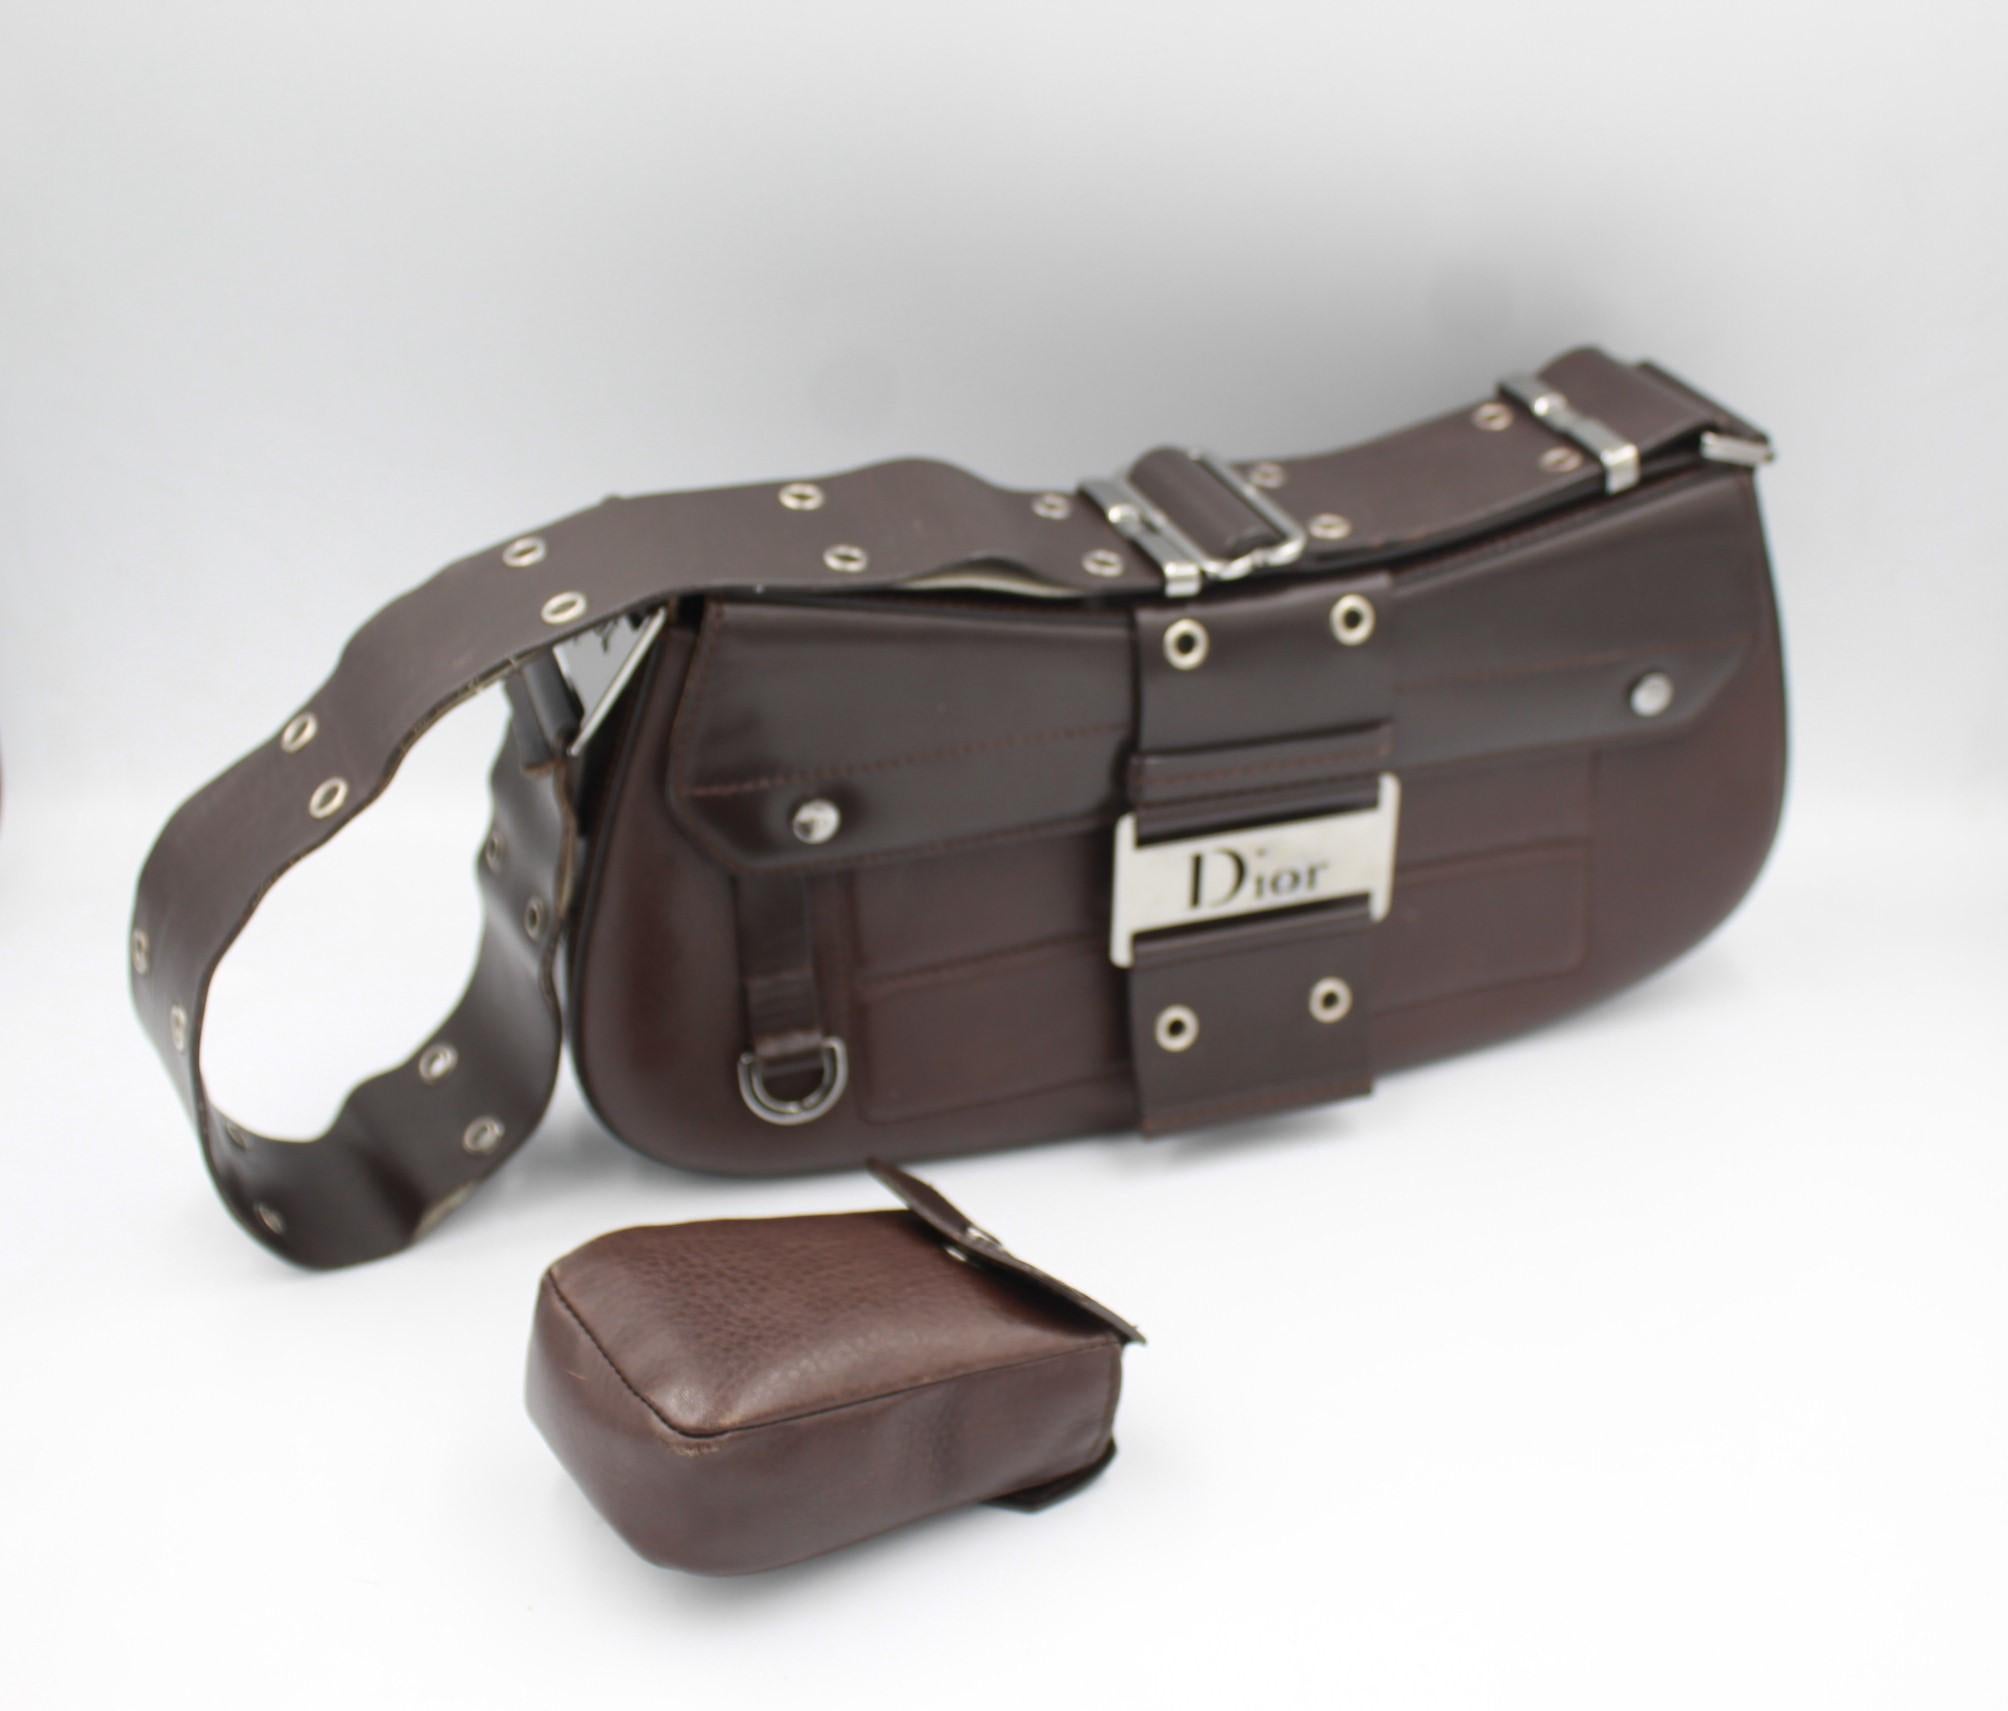 Christian Dior in brown Leather Street Chic handbag 1